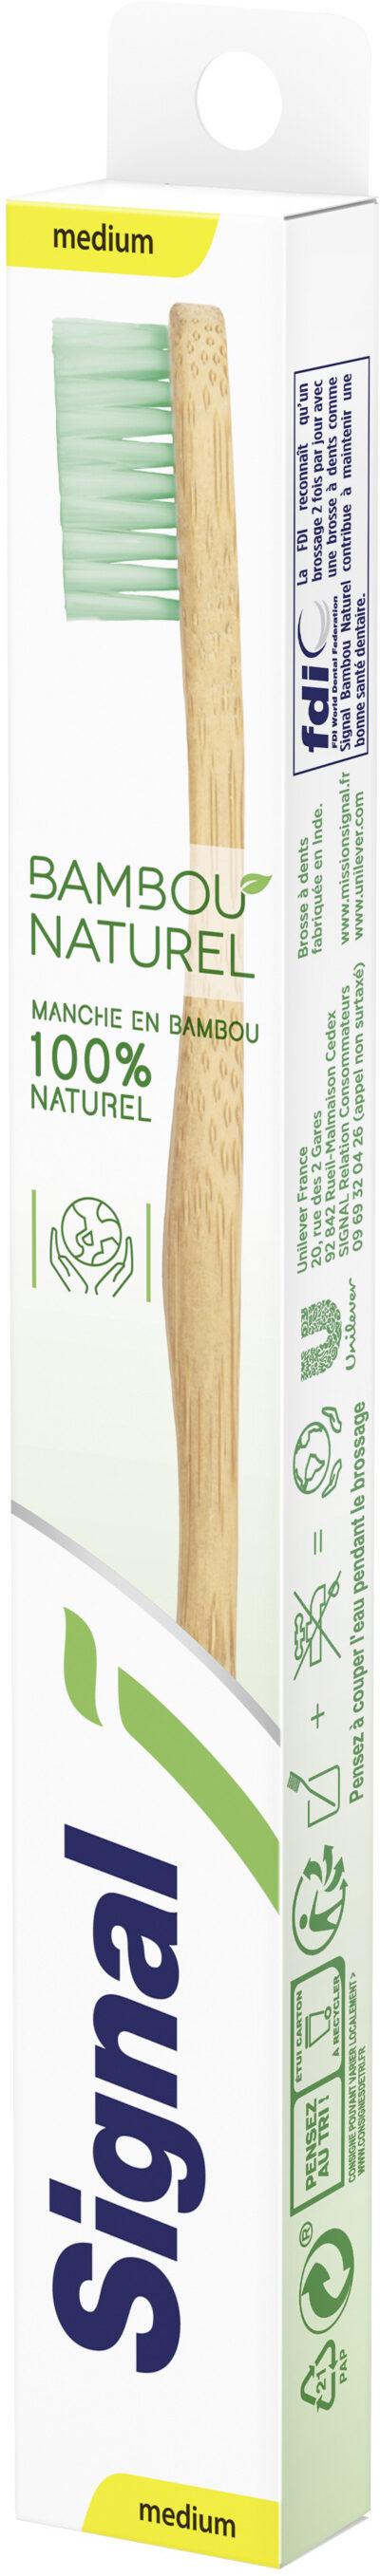 Signal Brosse à Dents Bambou Naturel Medium x1 - Product - fr